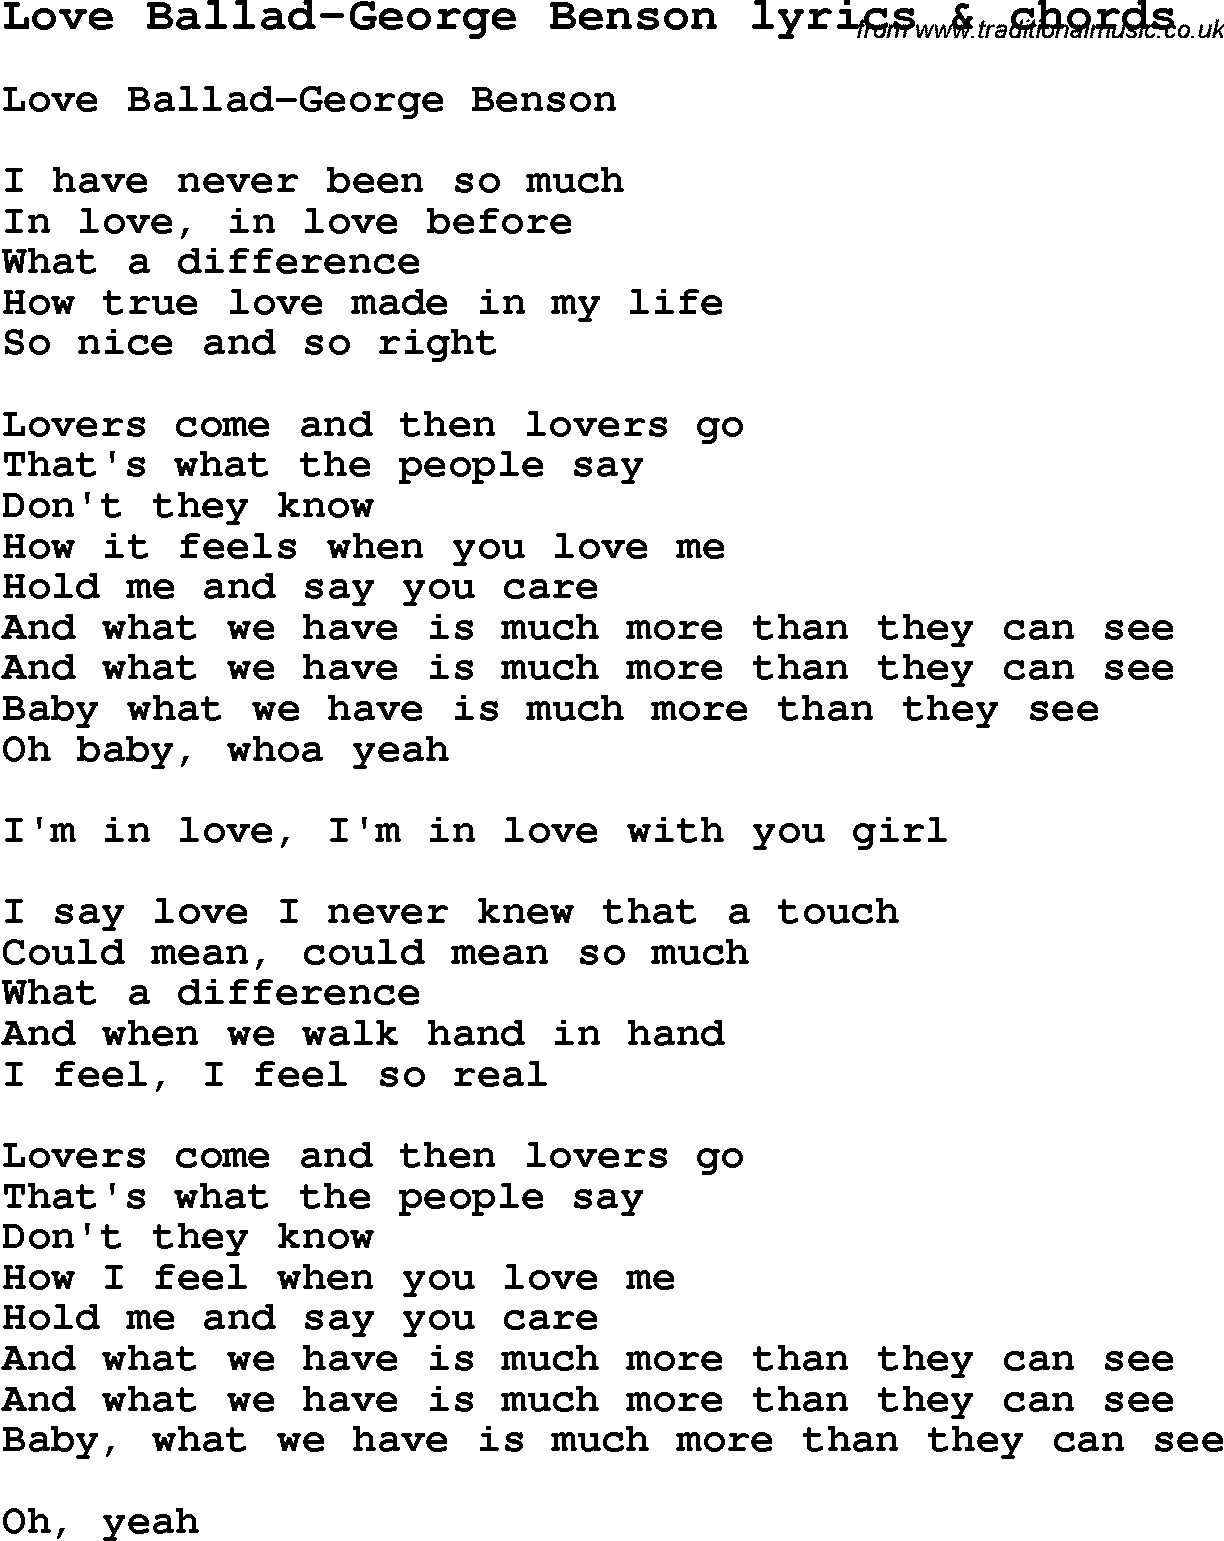 Love Song Lyrics for: Love Ballad-George Benson with chords for Ukulele, Guitar Banjo etc.